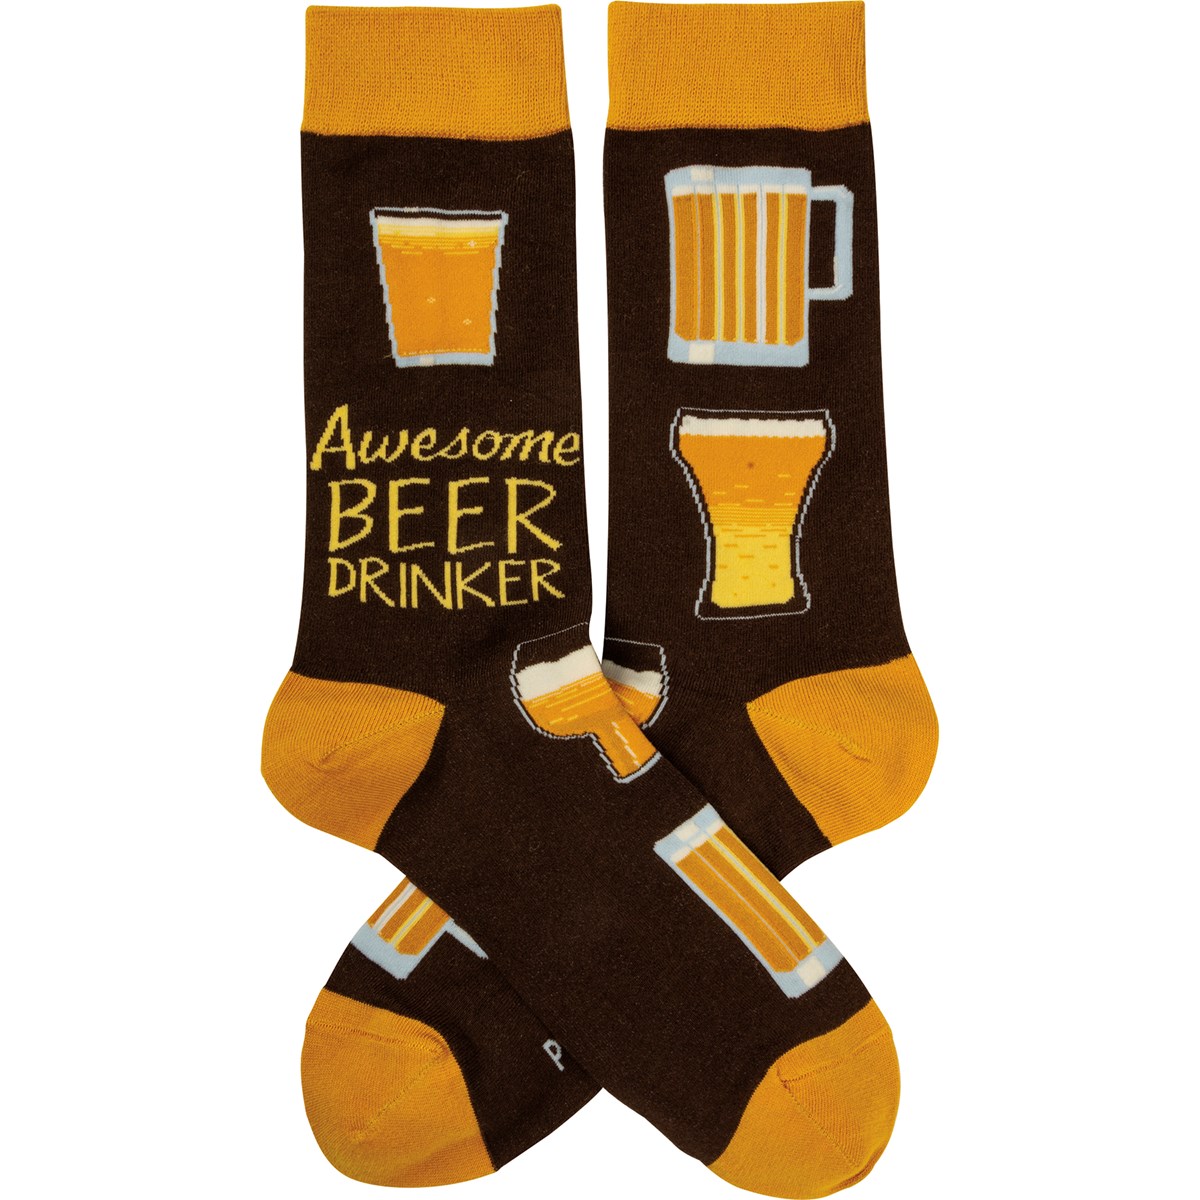 Awesome Beer Drinker Socks - Cotton, Nylon, Spandex